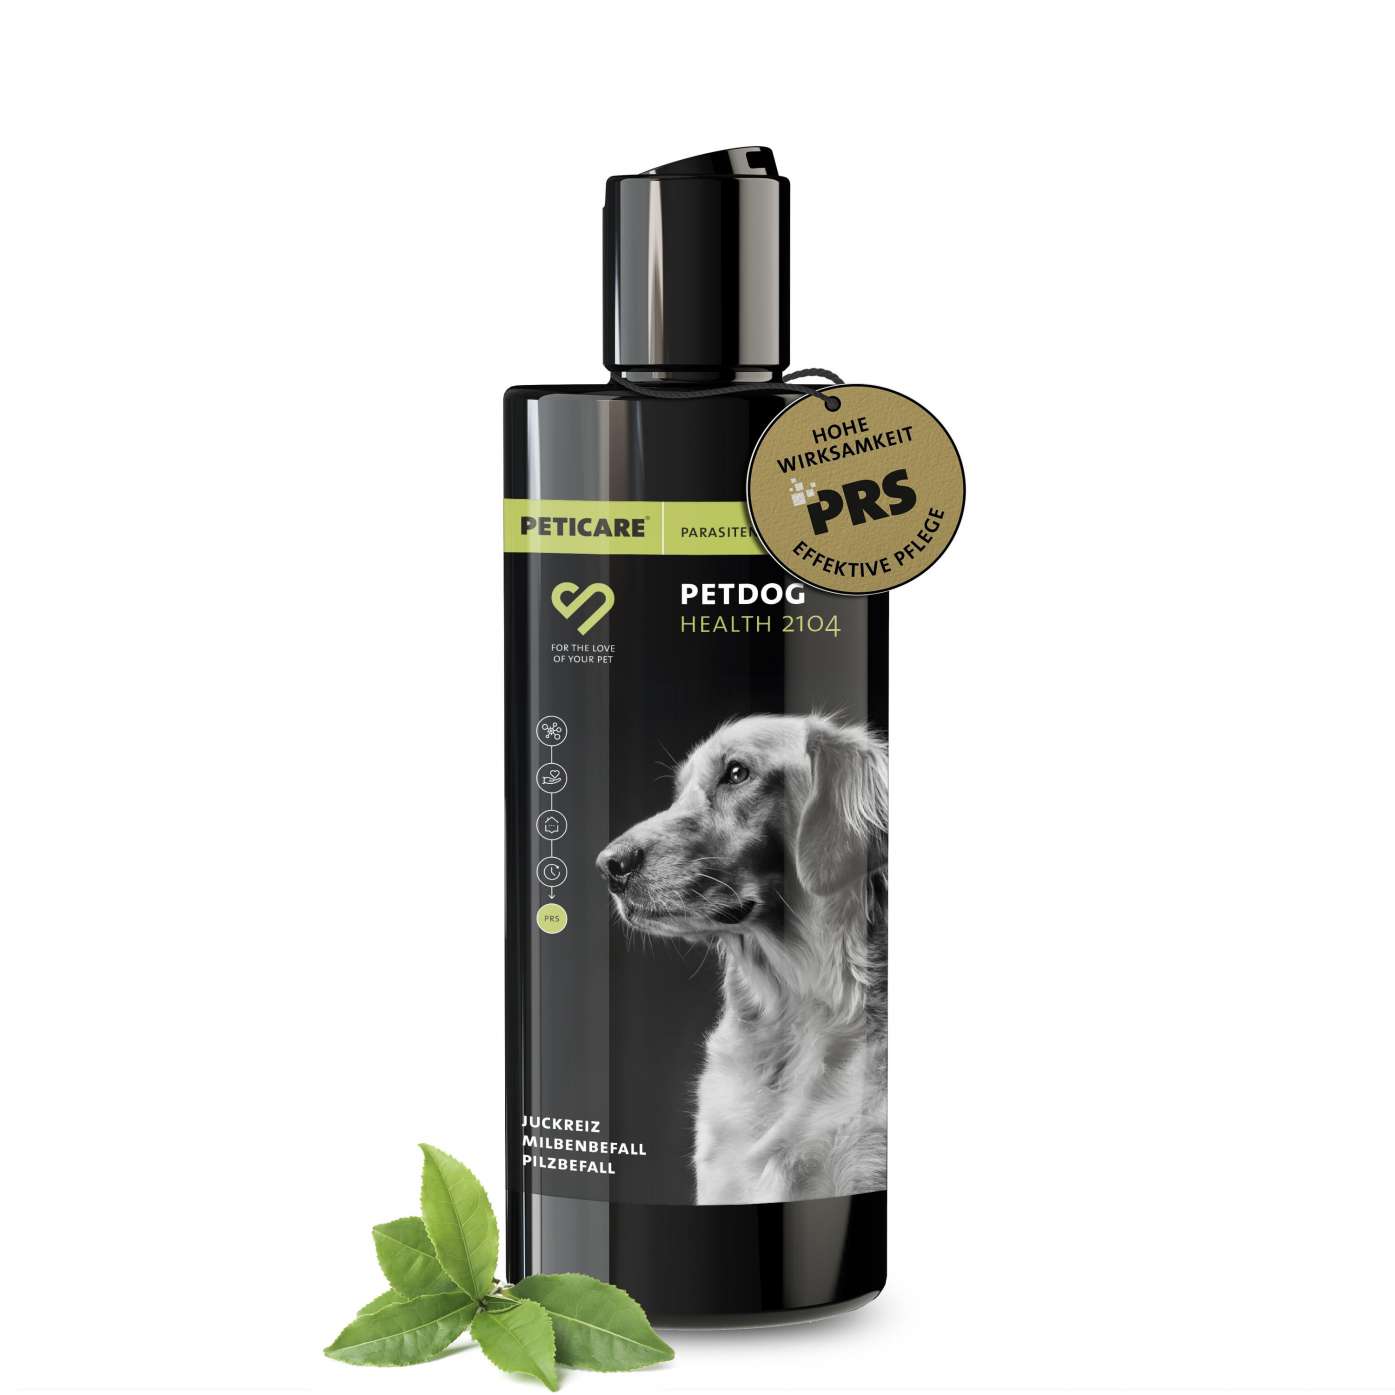 Hundeshampoo - speciel shampoo mod hos